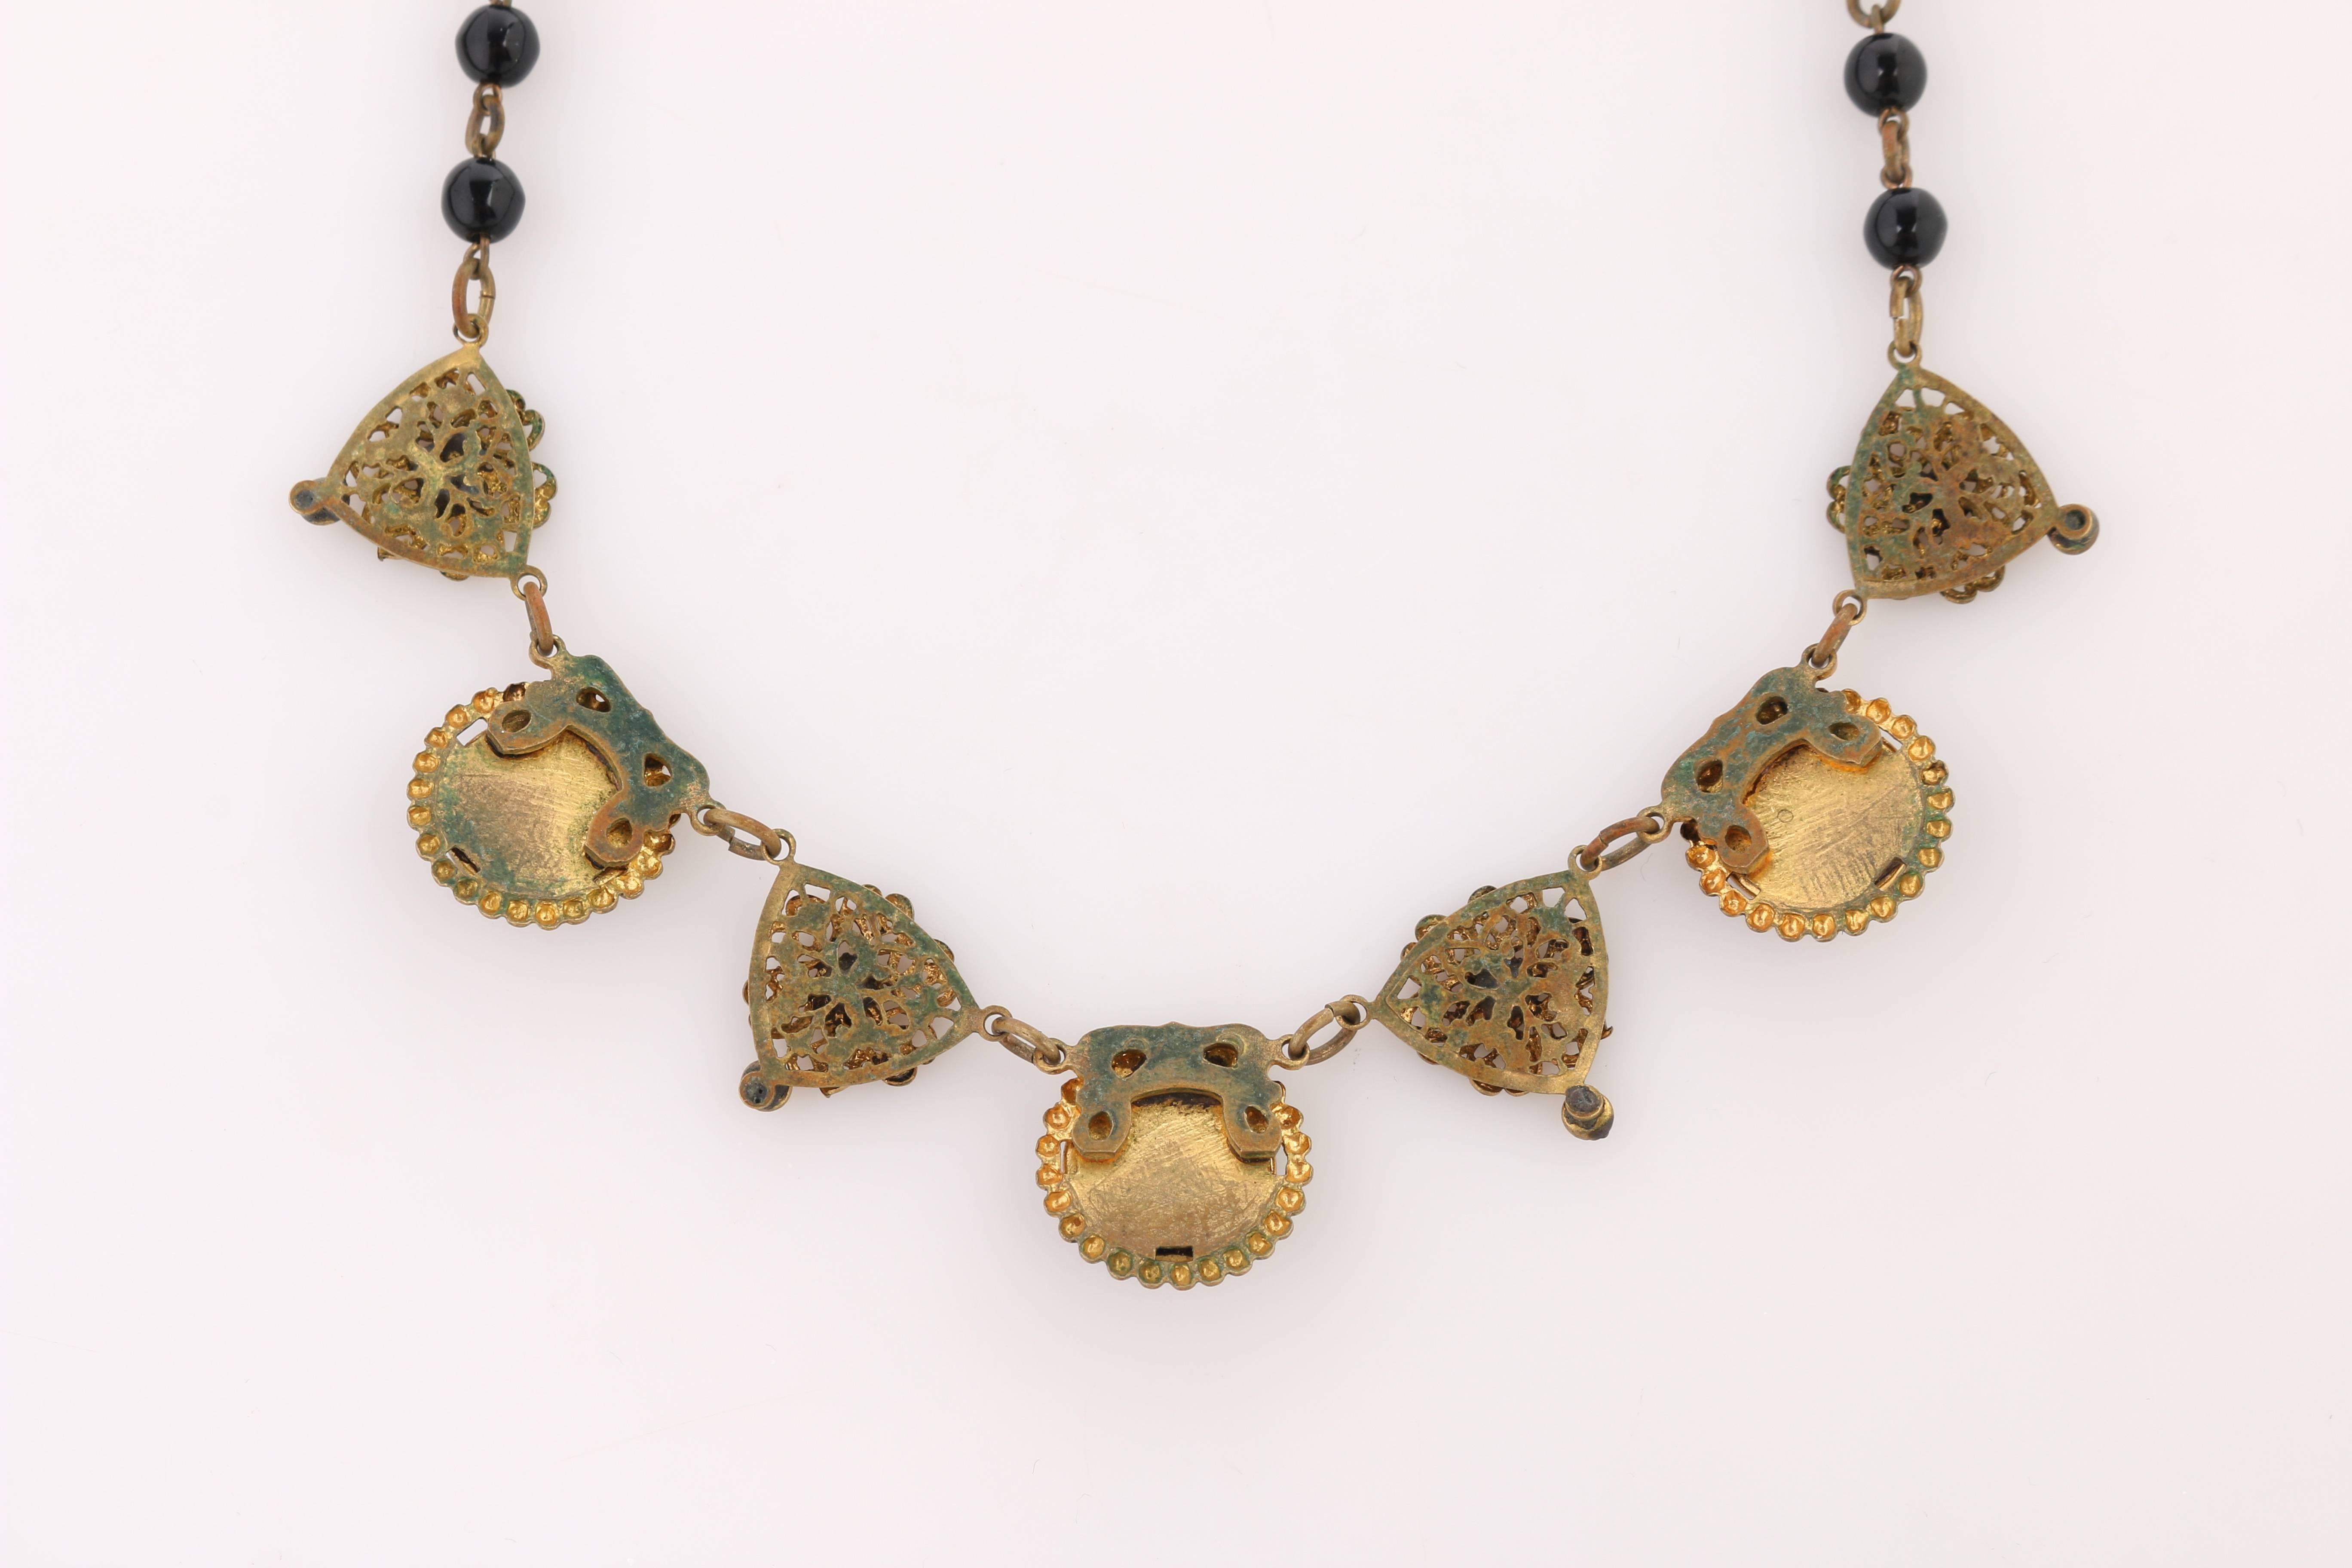 1920s choker necklace